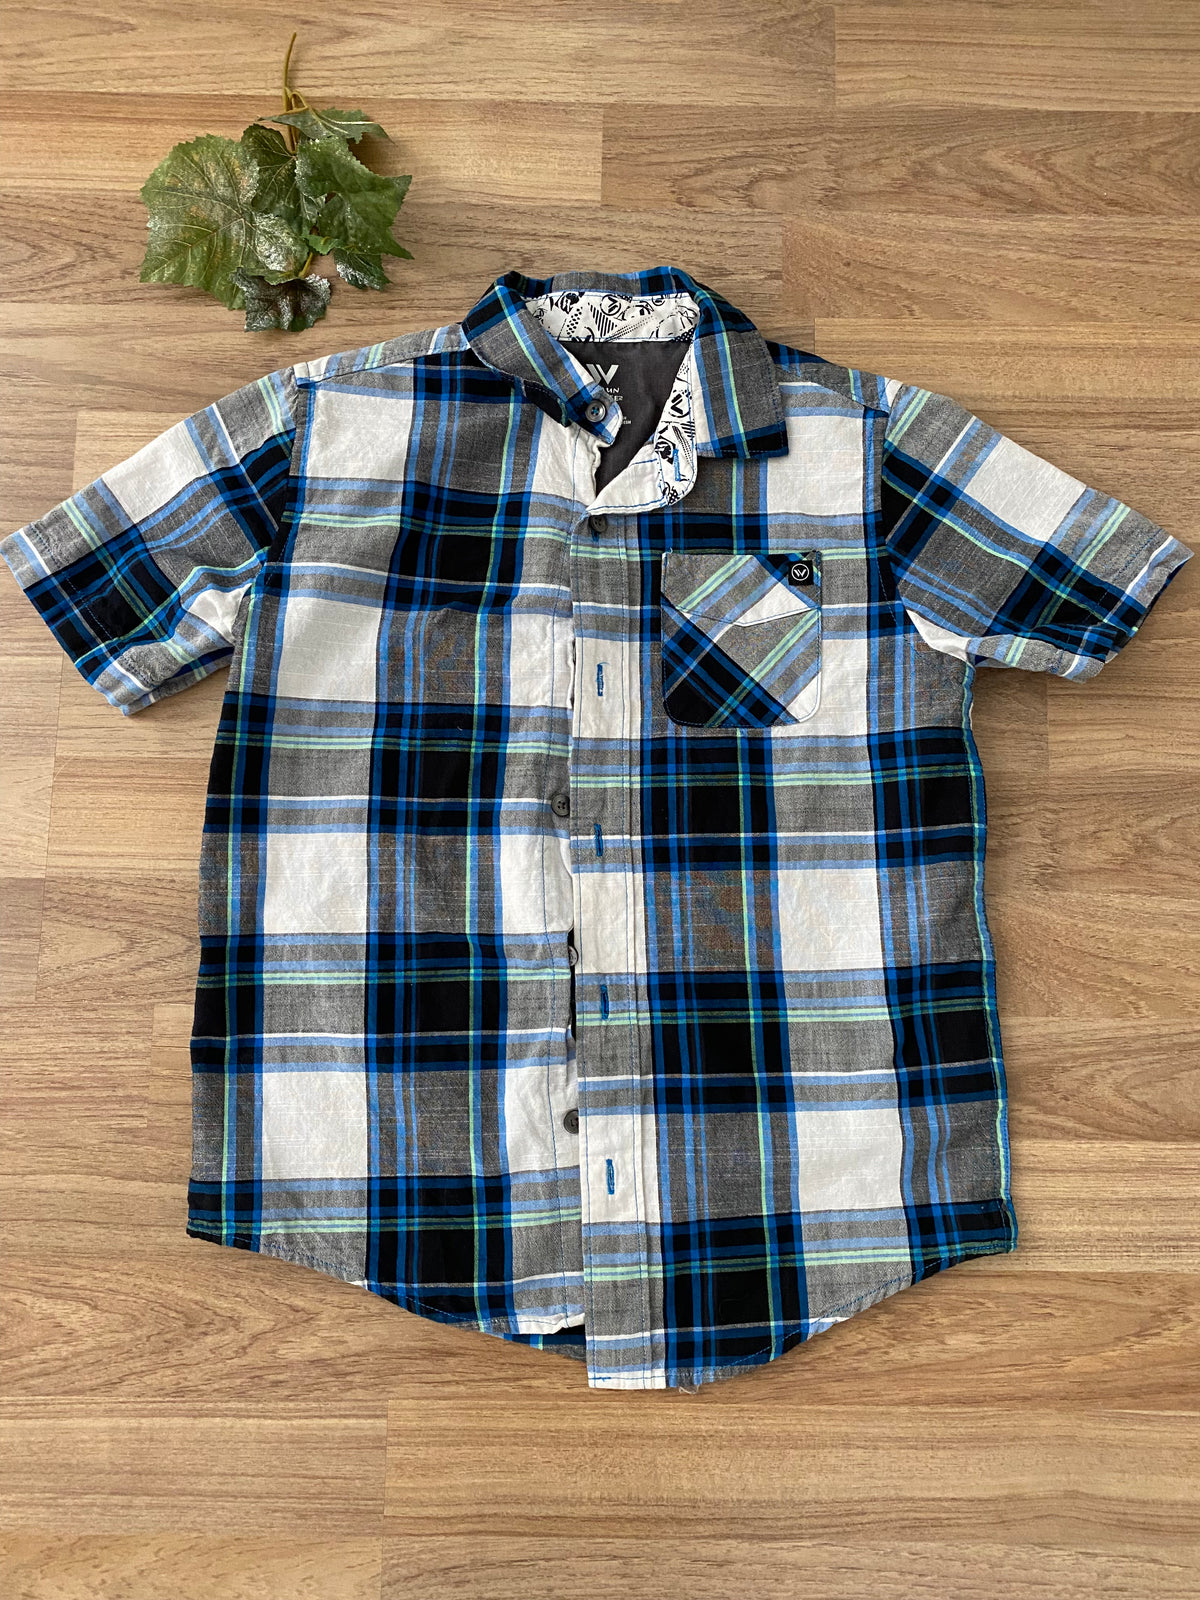 Full Button Up Shirt (Boys Size 6-7)